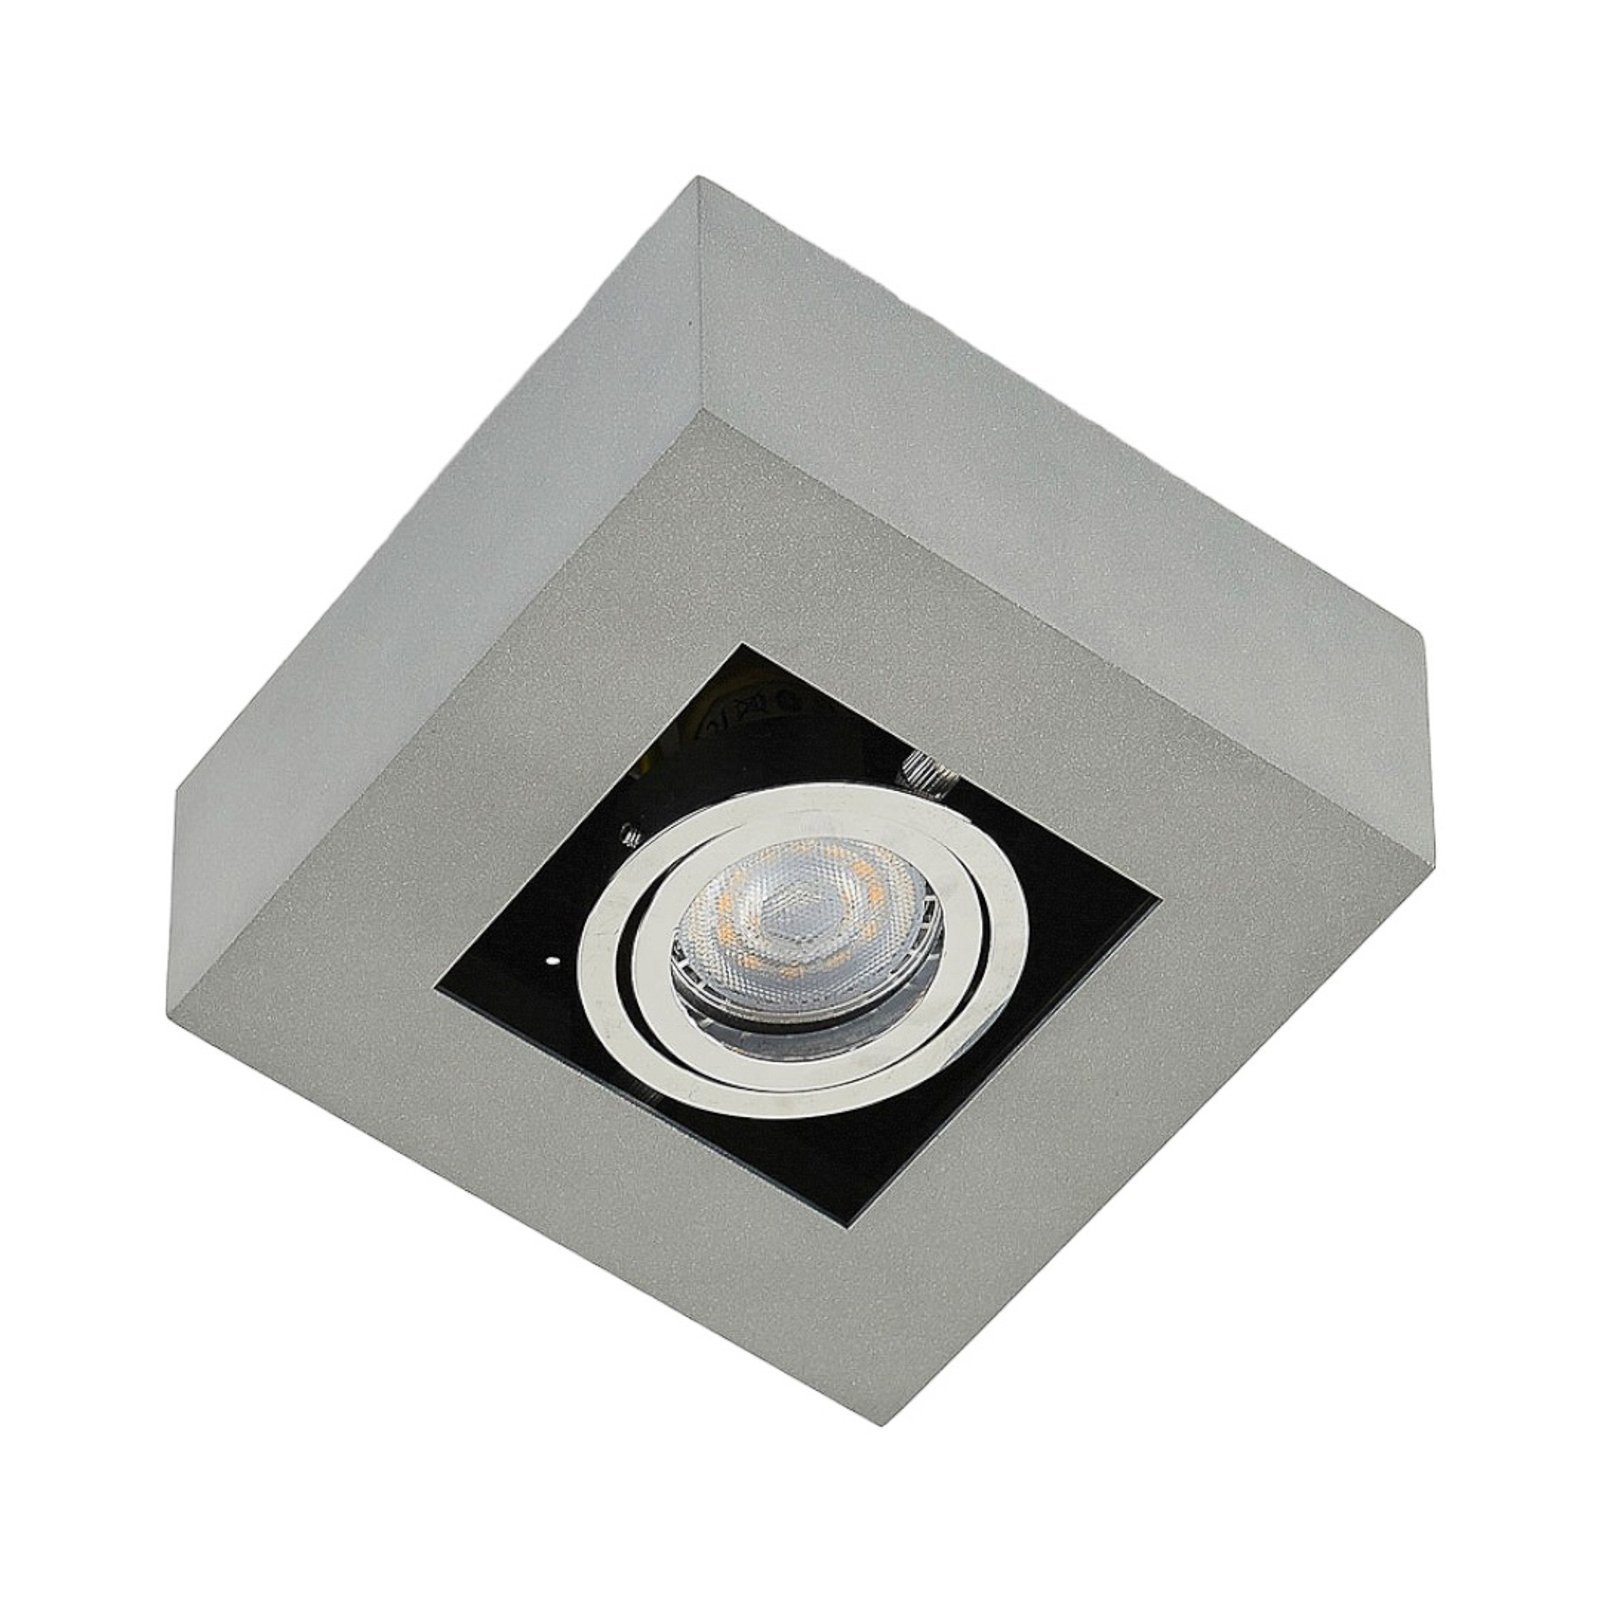 Vince aluminium ceiling light, silver grey